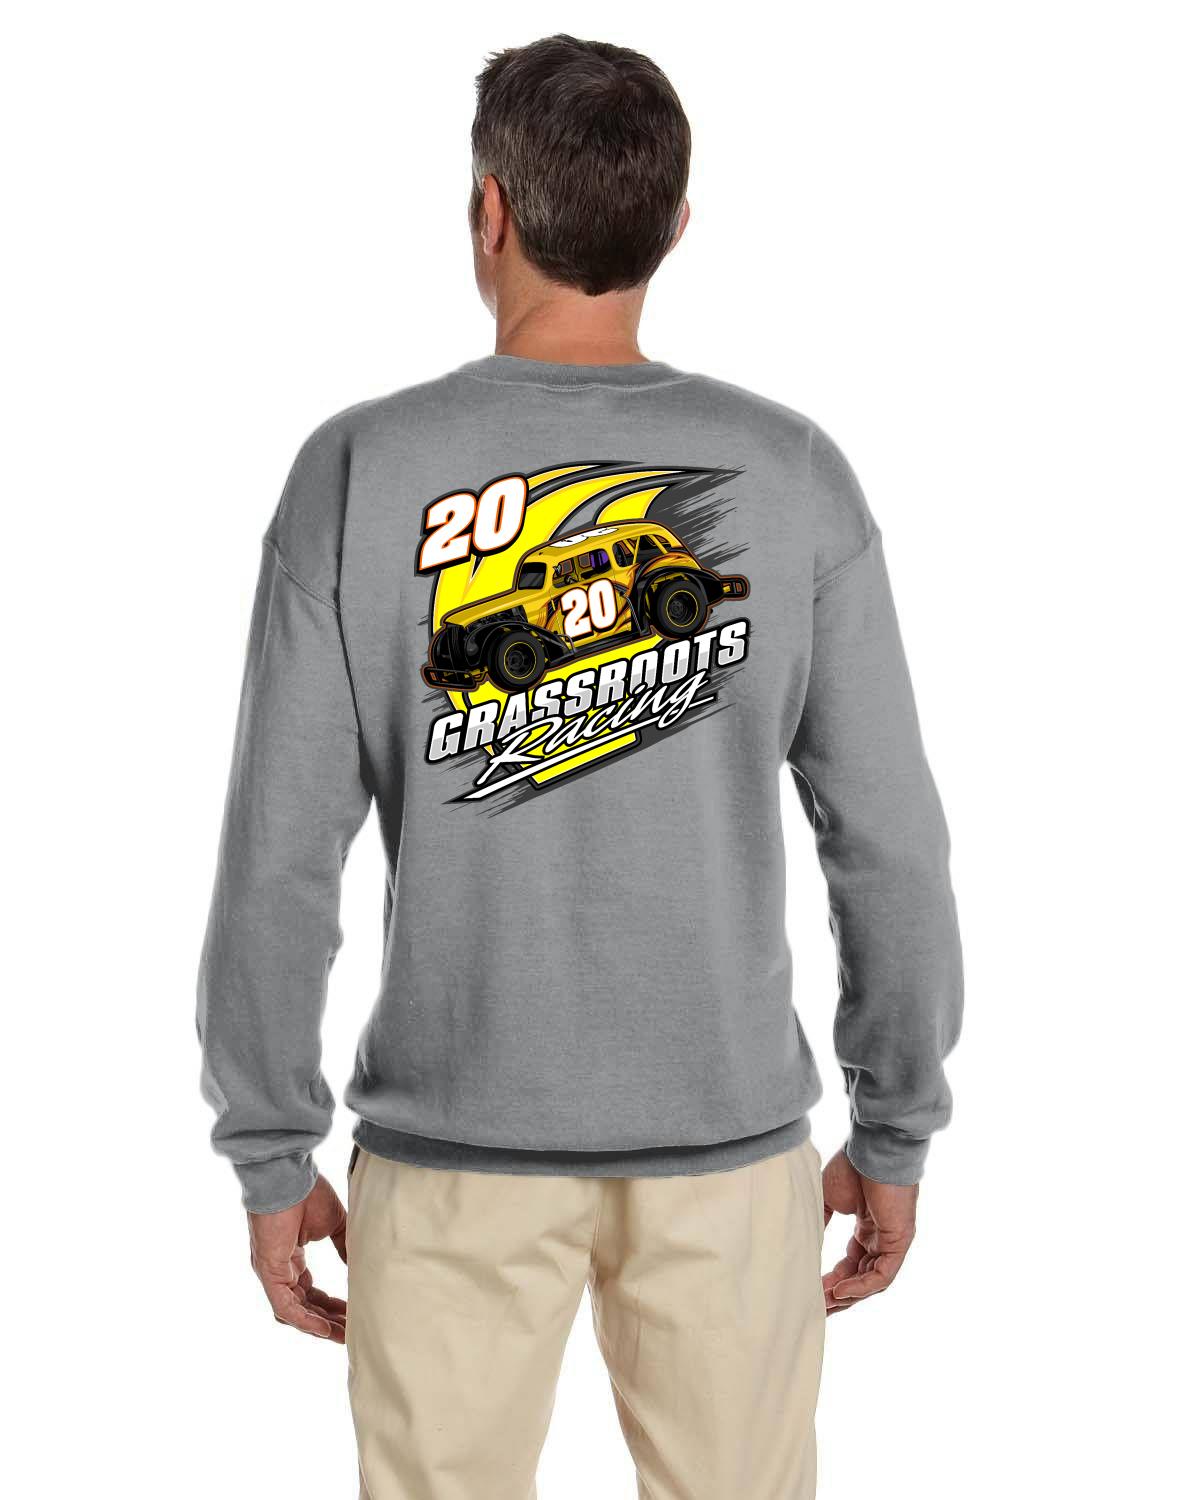 Cole McFadden / Grassroots Racing Adult crew neck sweater